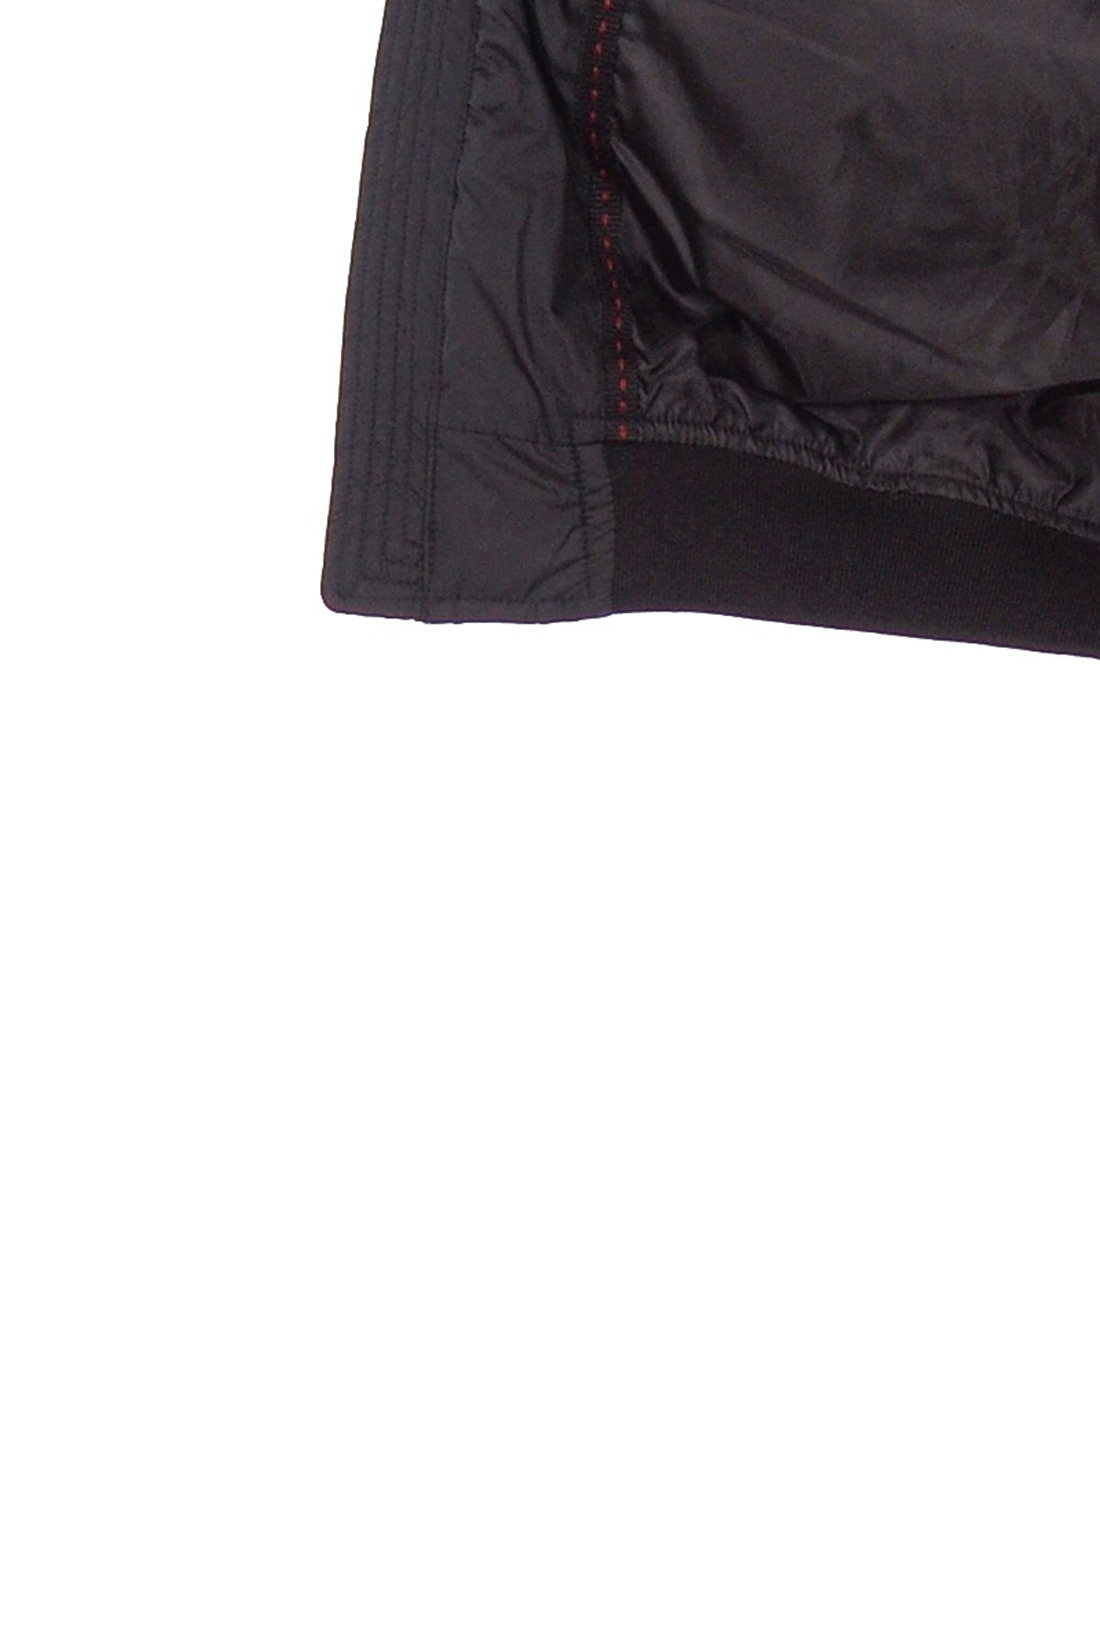 Куртка-бомбер с шевронами (арт. baon B539001), размер S, цвет черный Куртка-бомбер с шевронами (арт. baon B539001) - фото 2